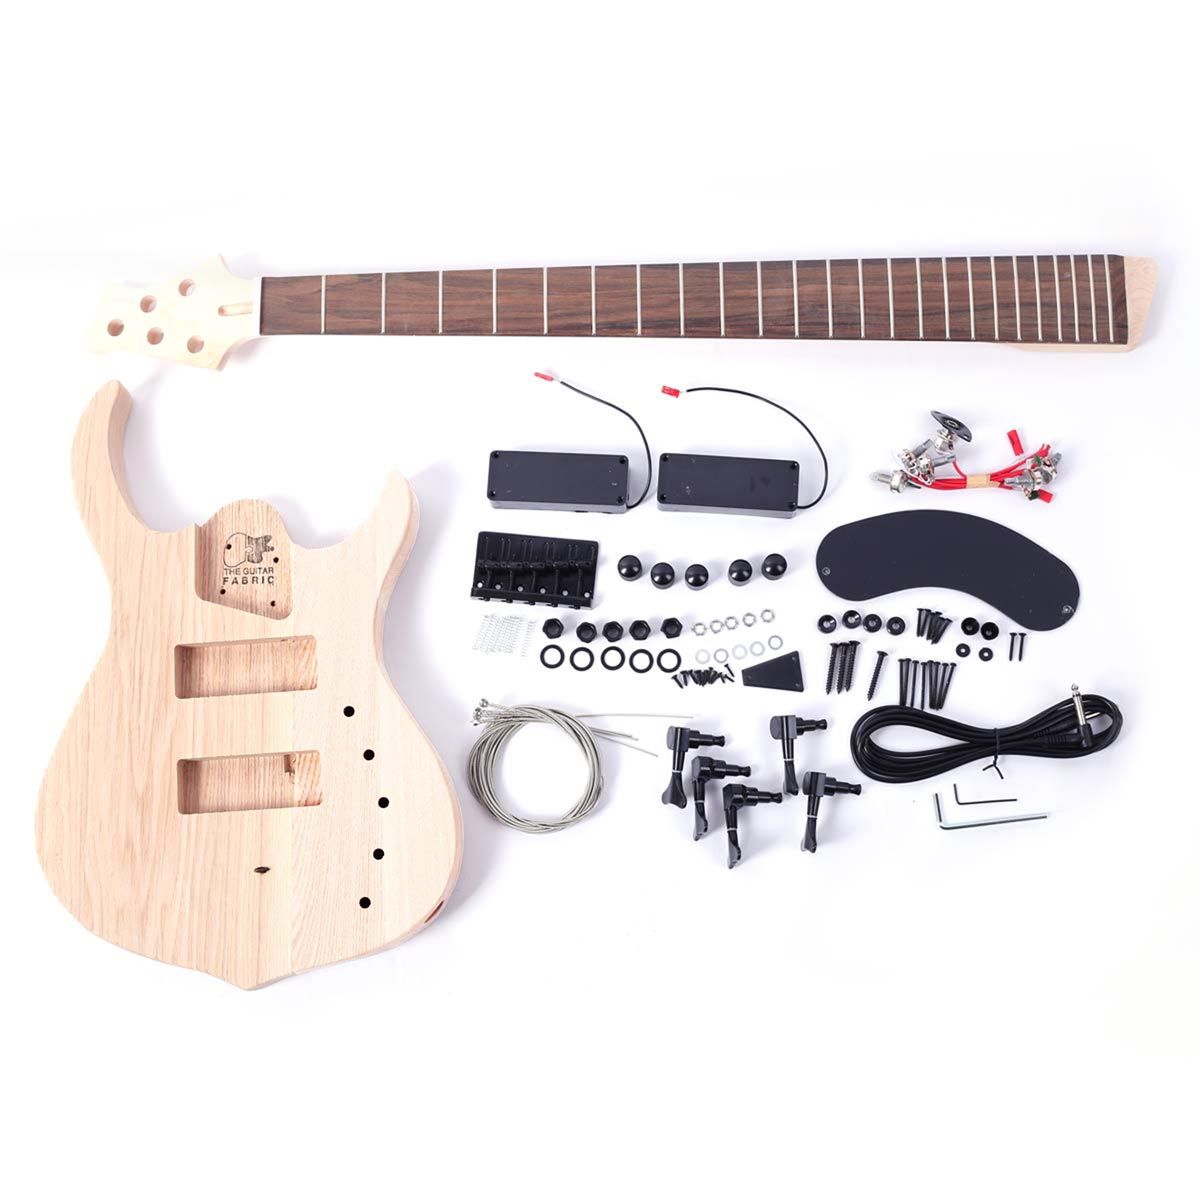 DiY Guitar Bass Kit - Ibanez-style 5 Strings